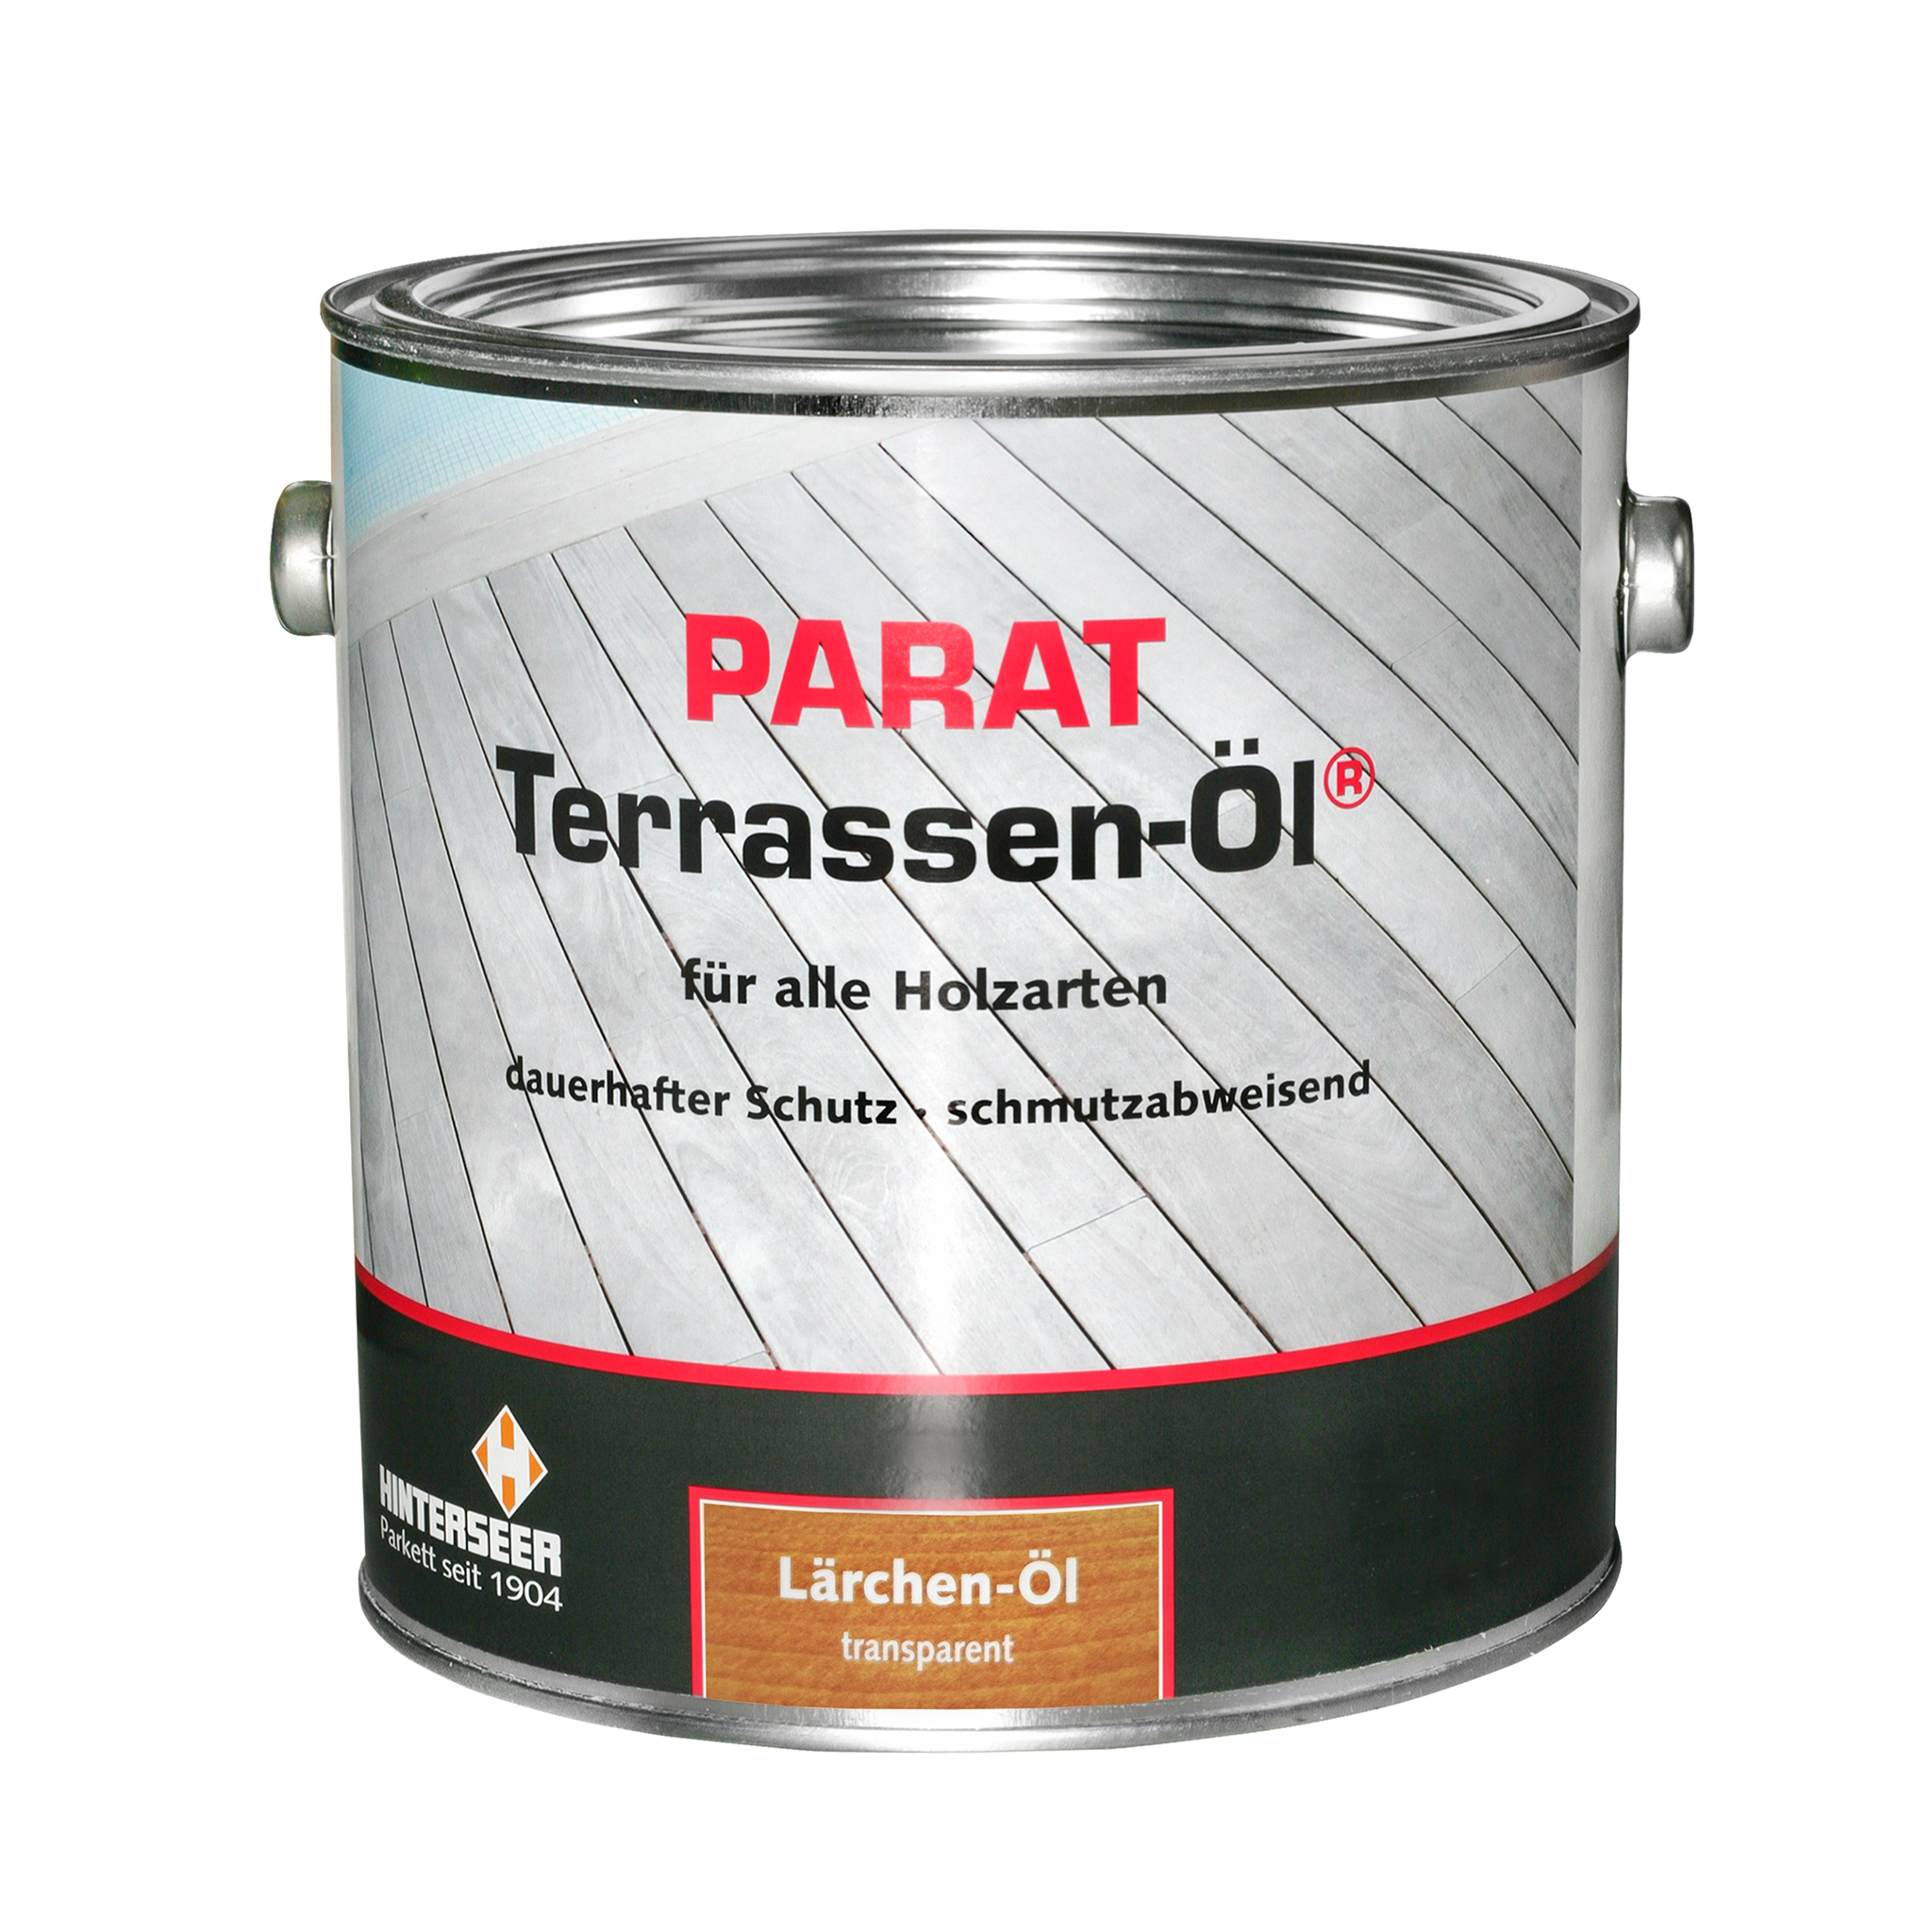 PARAT Terrassenöl 2,5 Ltr. Farbvarianten